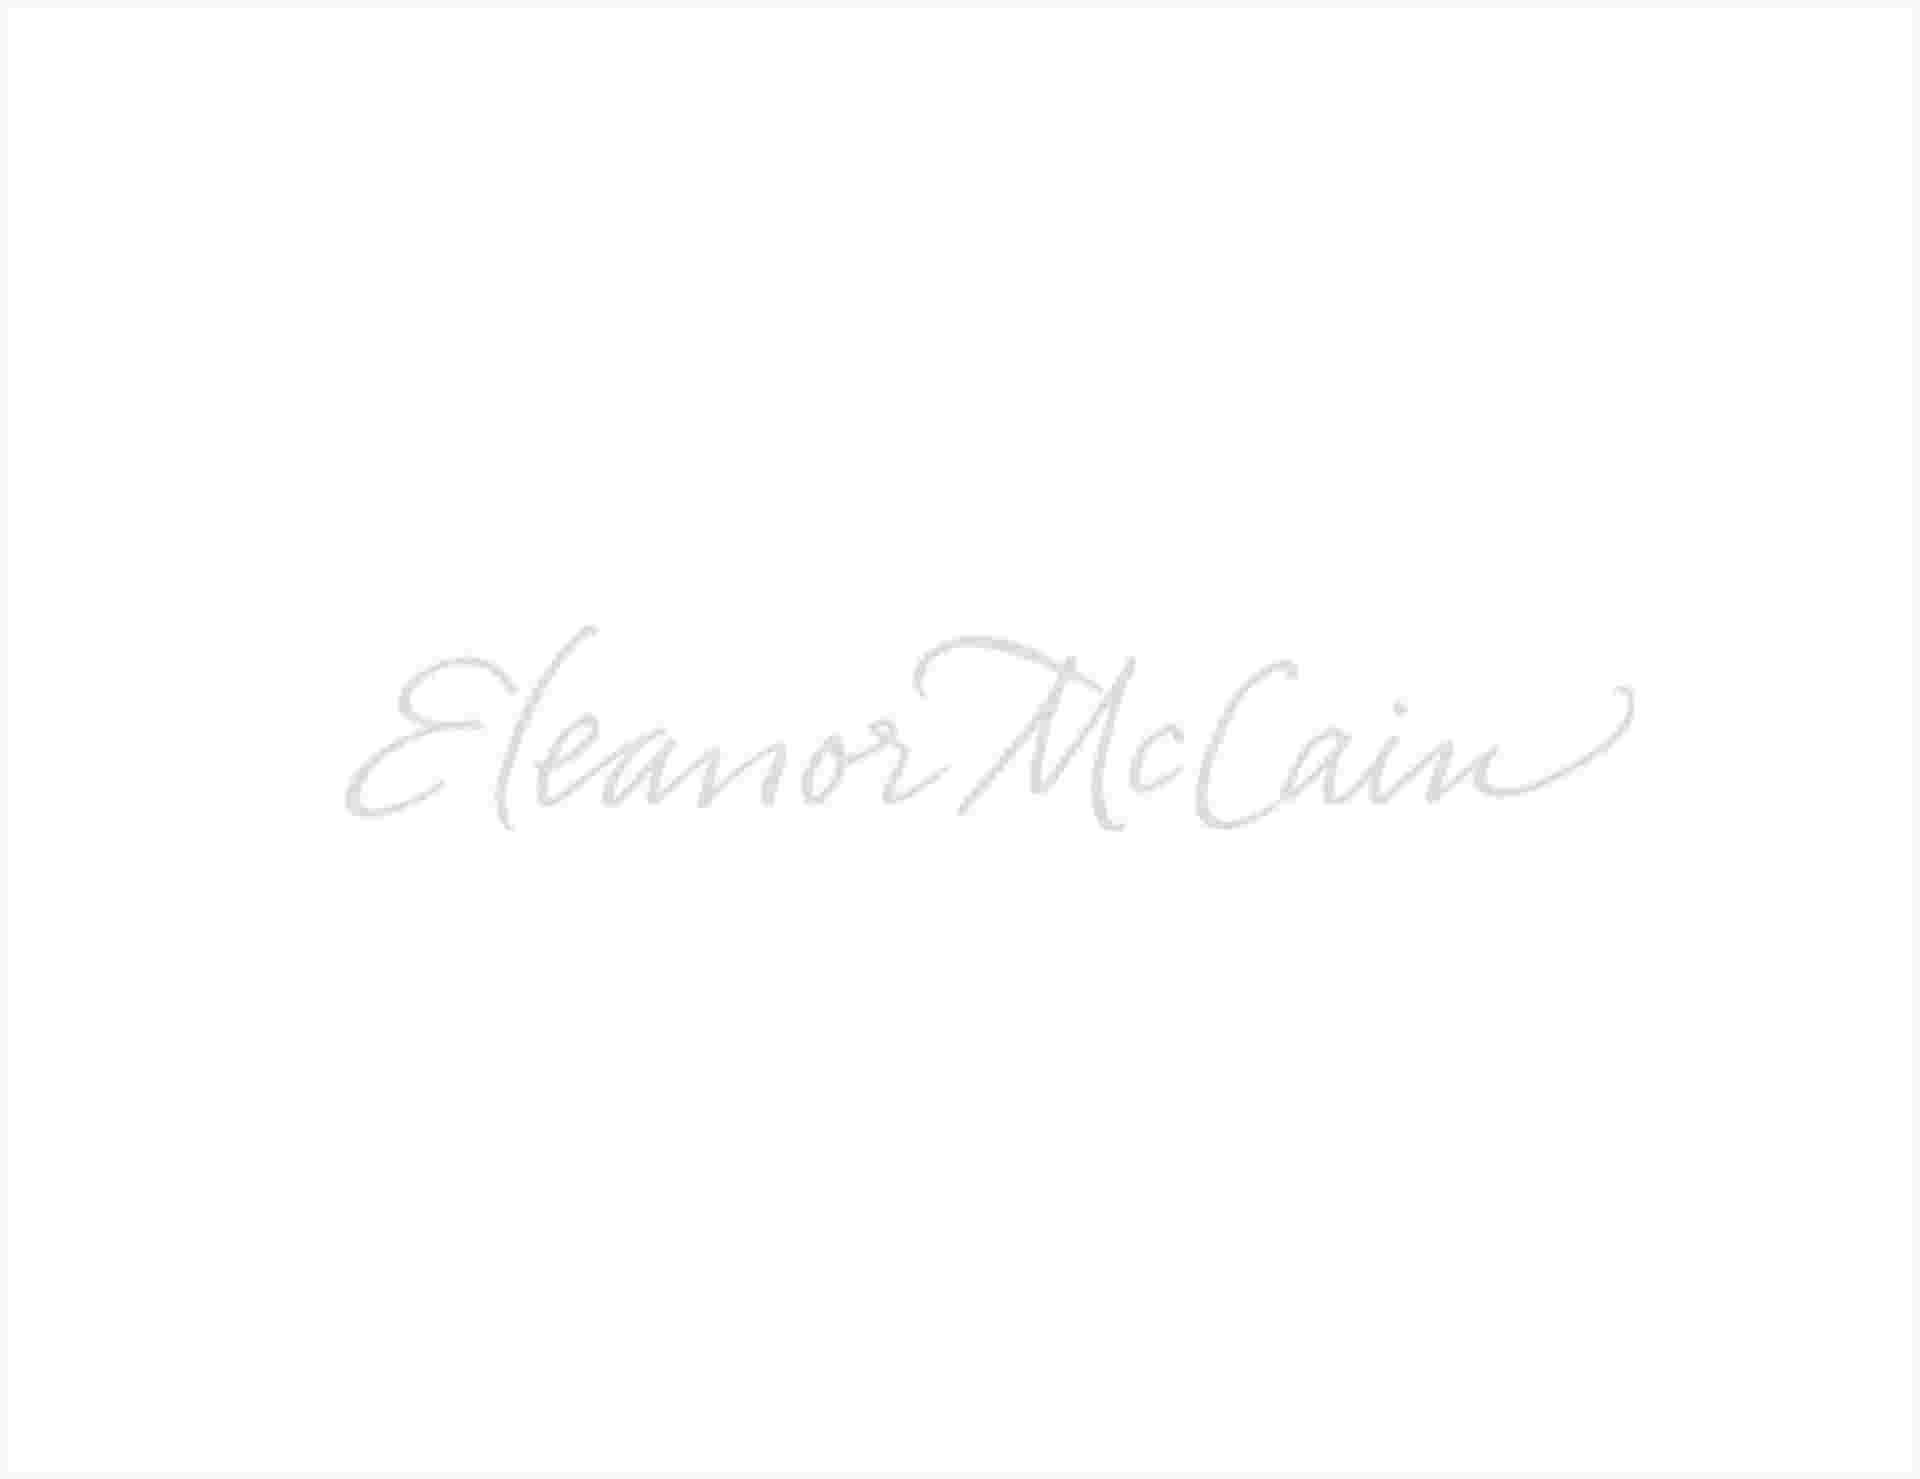 Eleanor McCain - EleanorMcCain-2_1